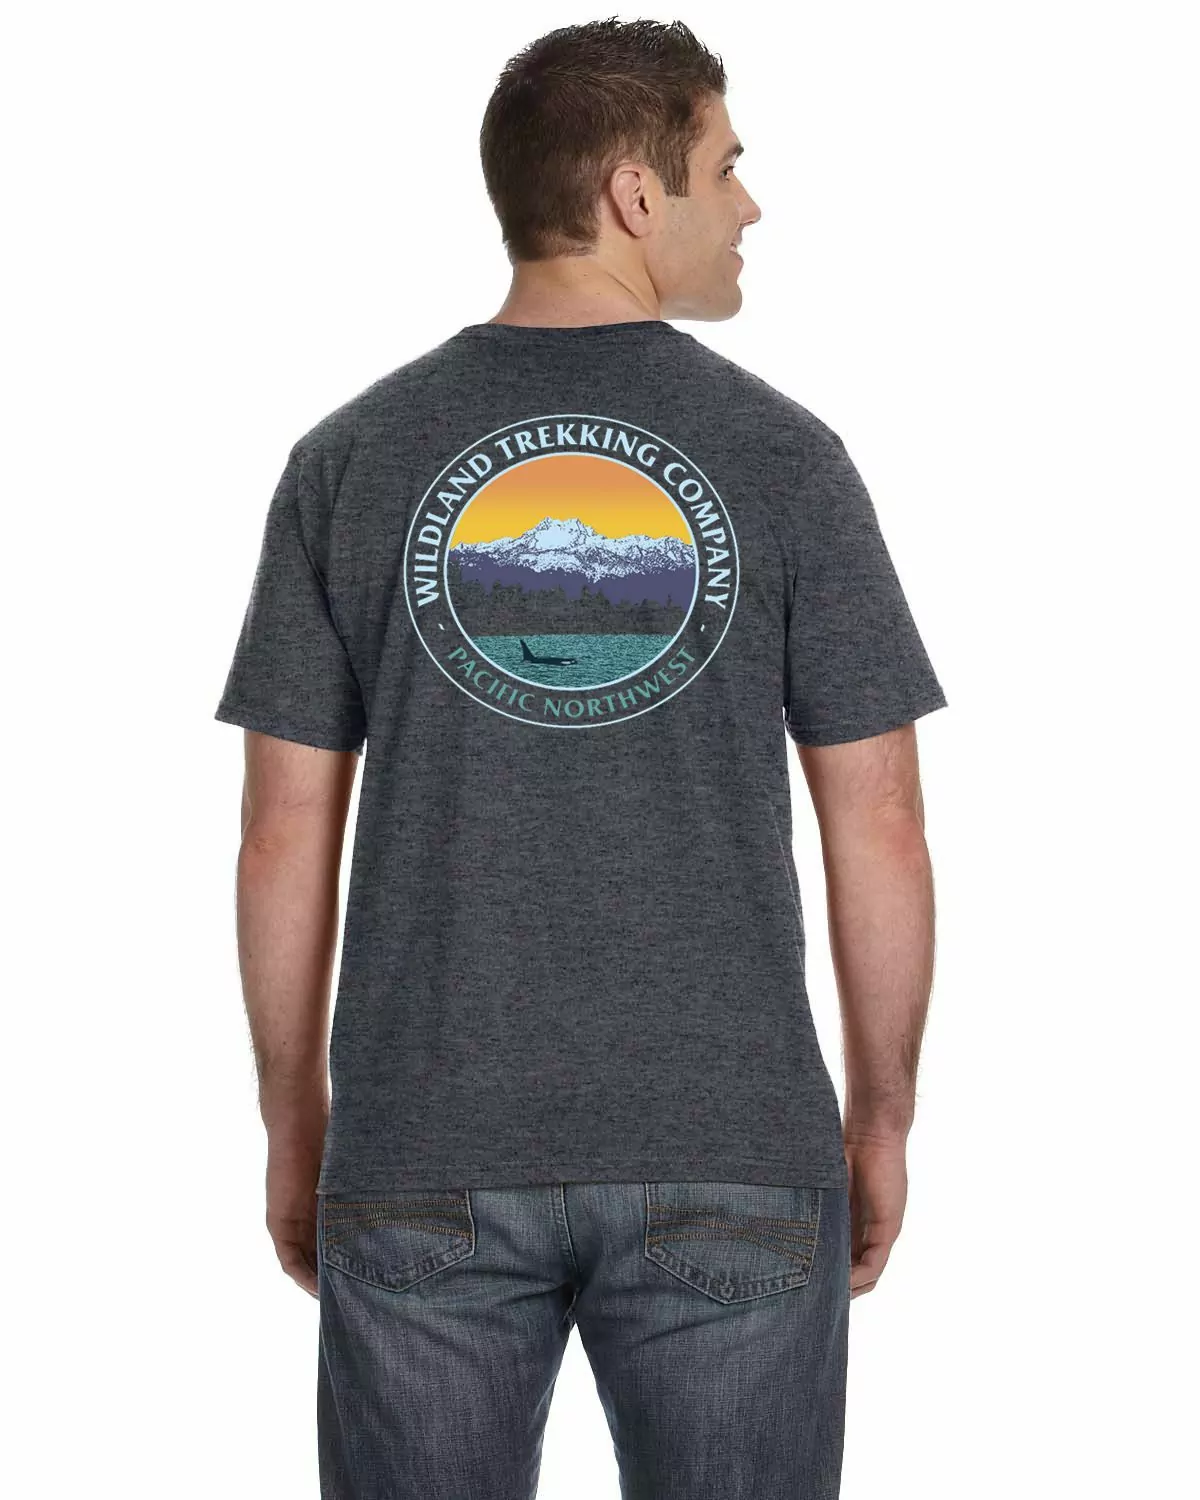 Mens Nature T Shirt, Hiking Shirt, Camping Shirts for Men, Mens Graphic  Tees, Outdoor Adventure Shirt -  Canada